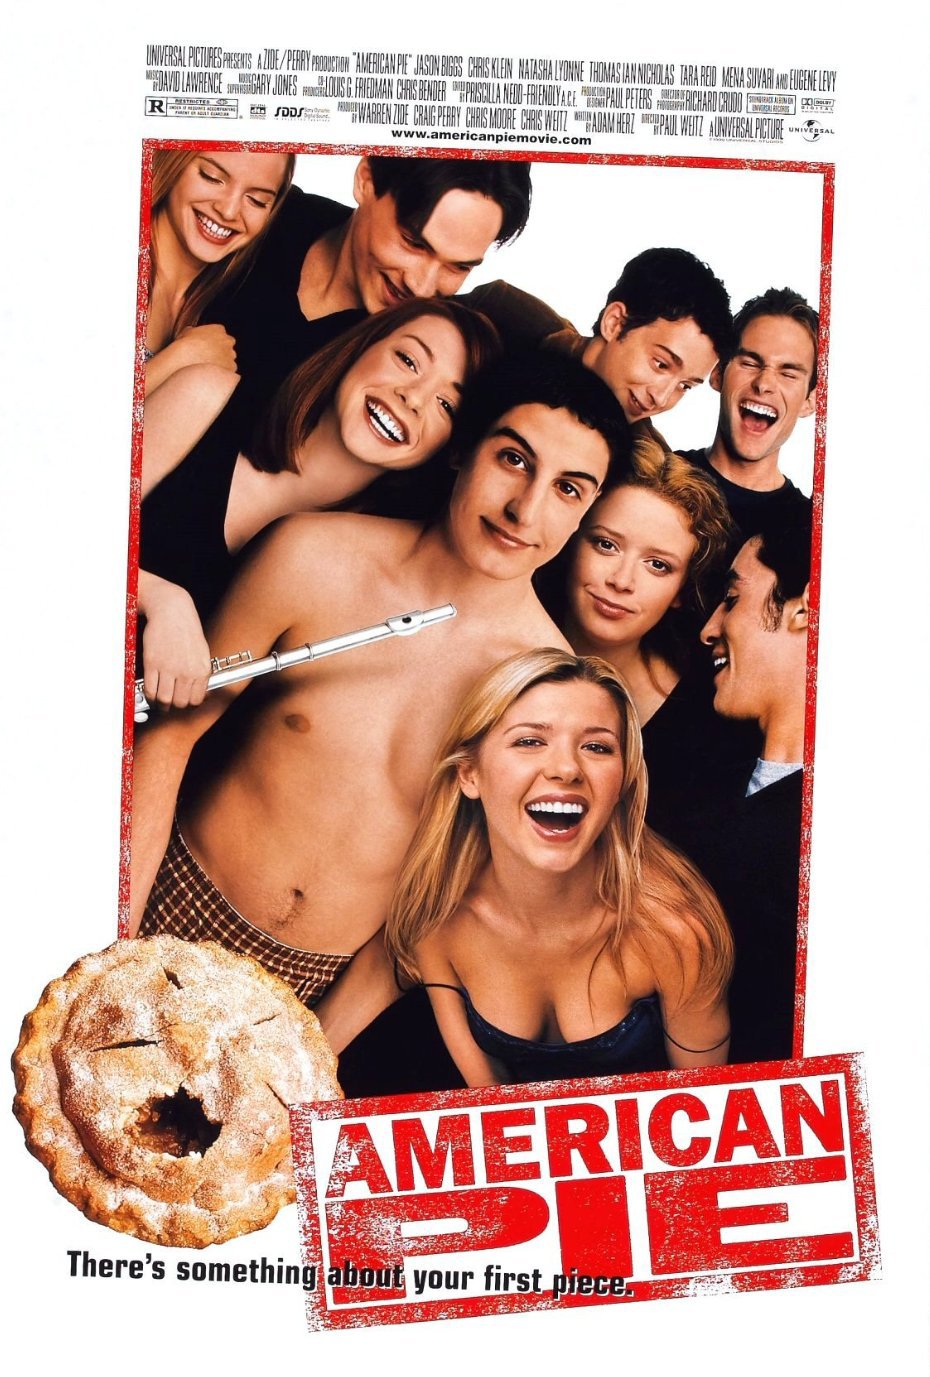 American Pie 1 (1999) - Watch Online. softmeter.blogspot.com